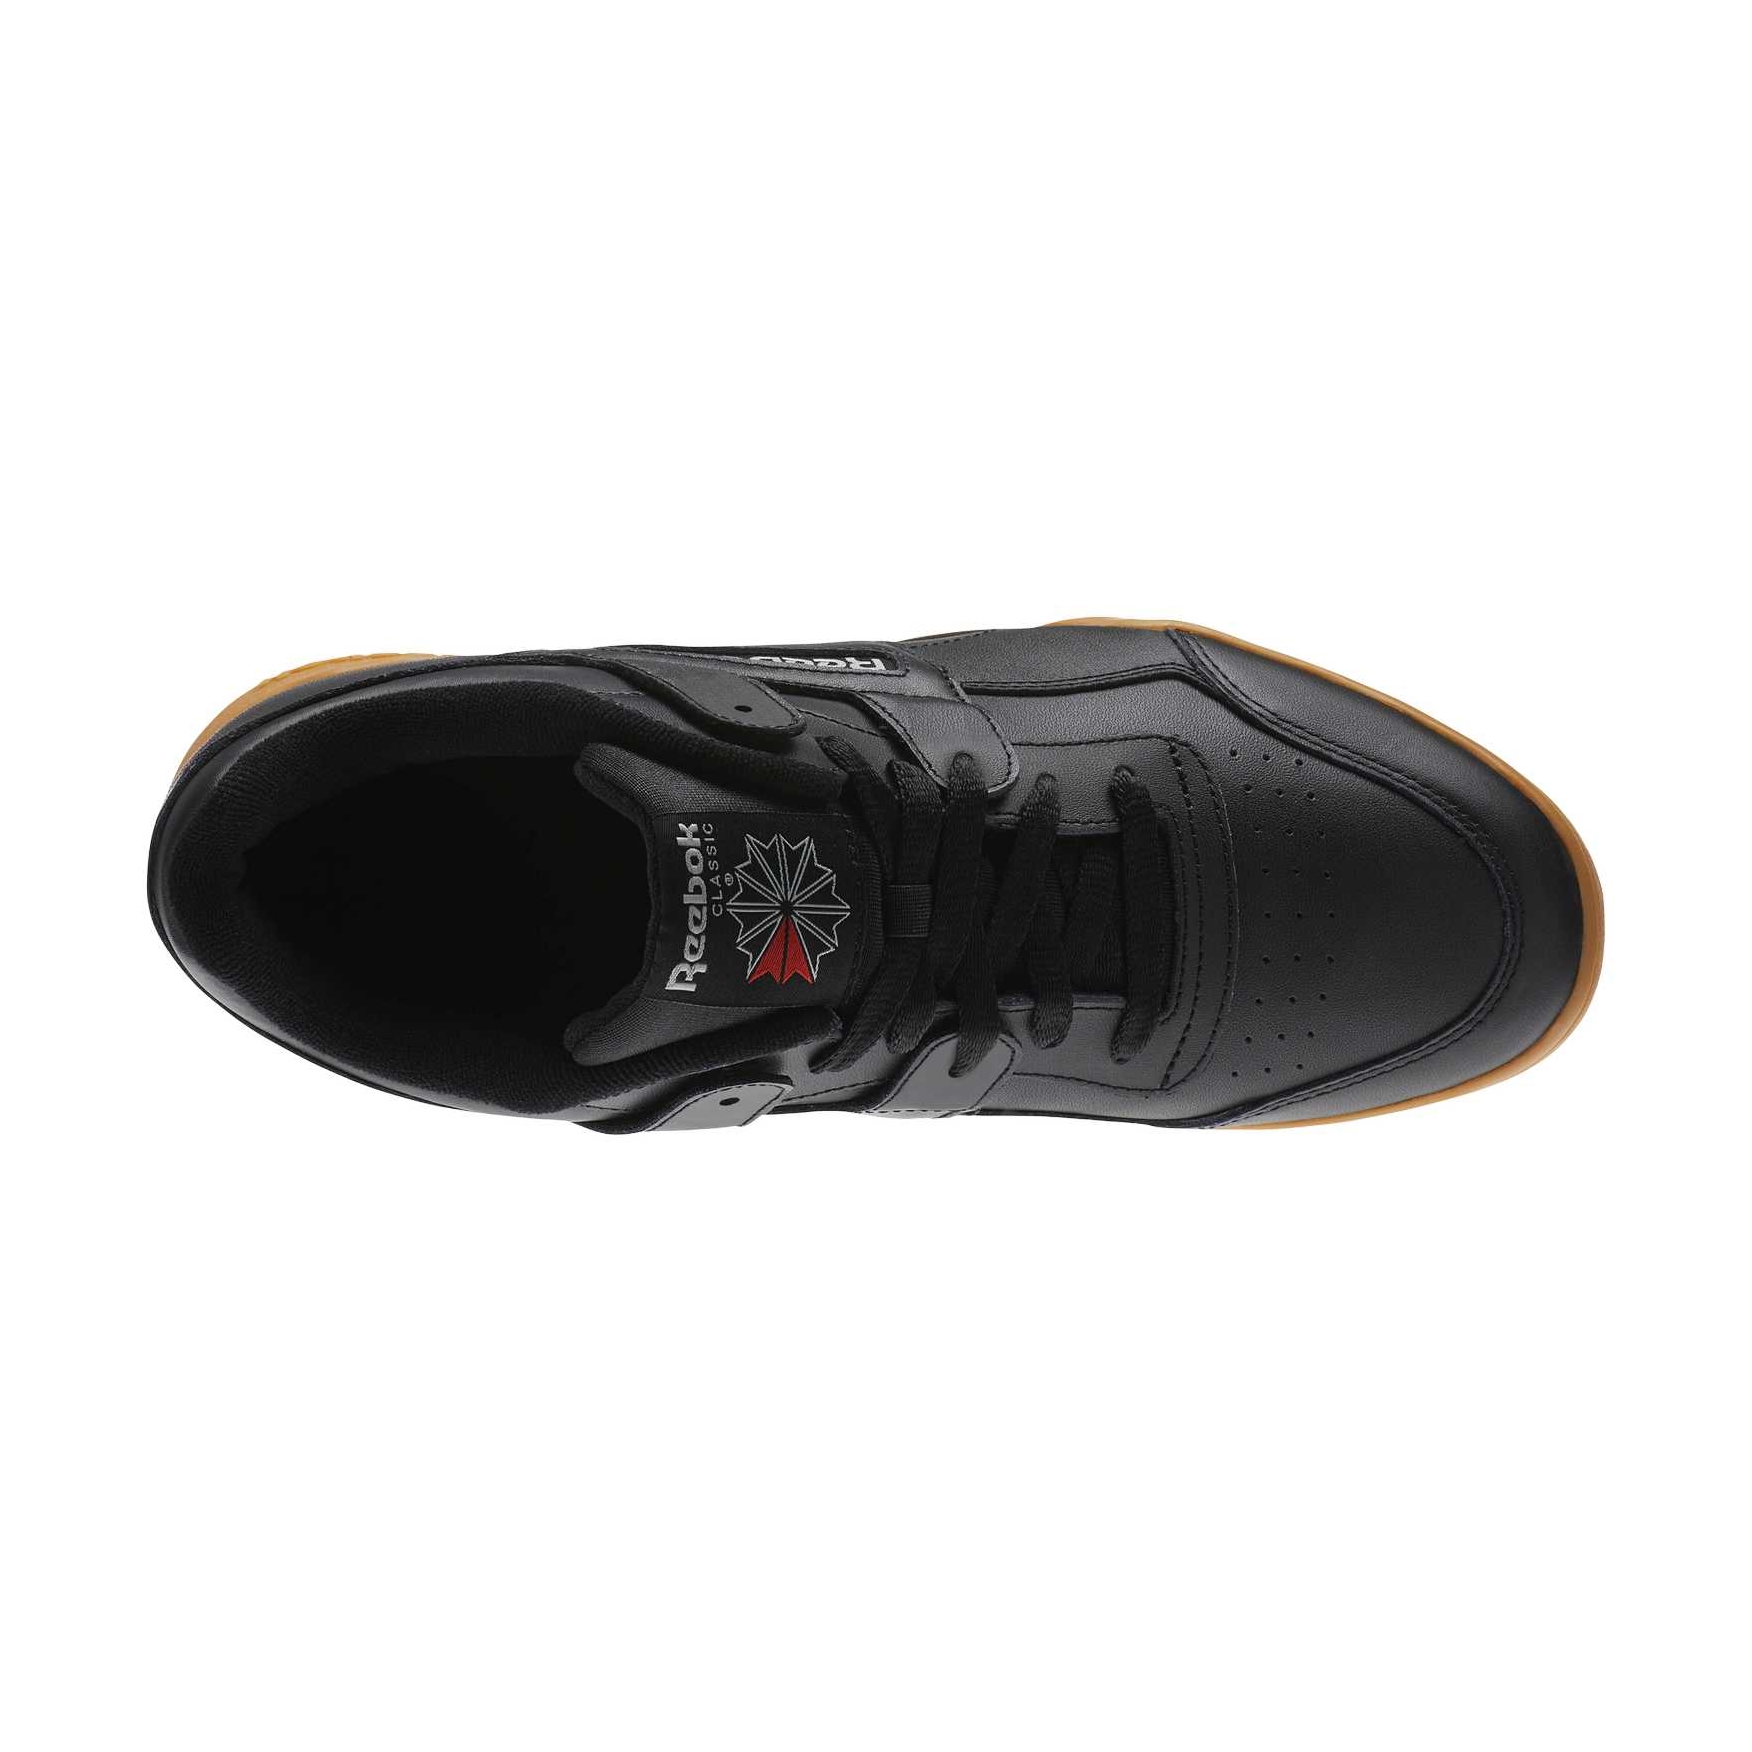 Reebok Workout Plus Men's Sneaker Training Shoe Black Athletic Trainer #065  #127